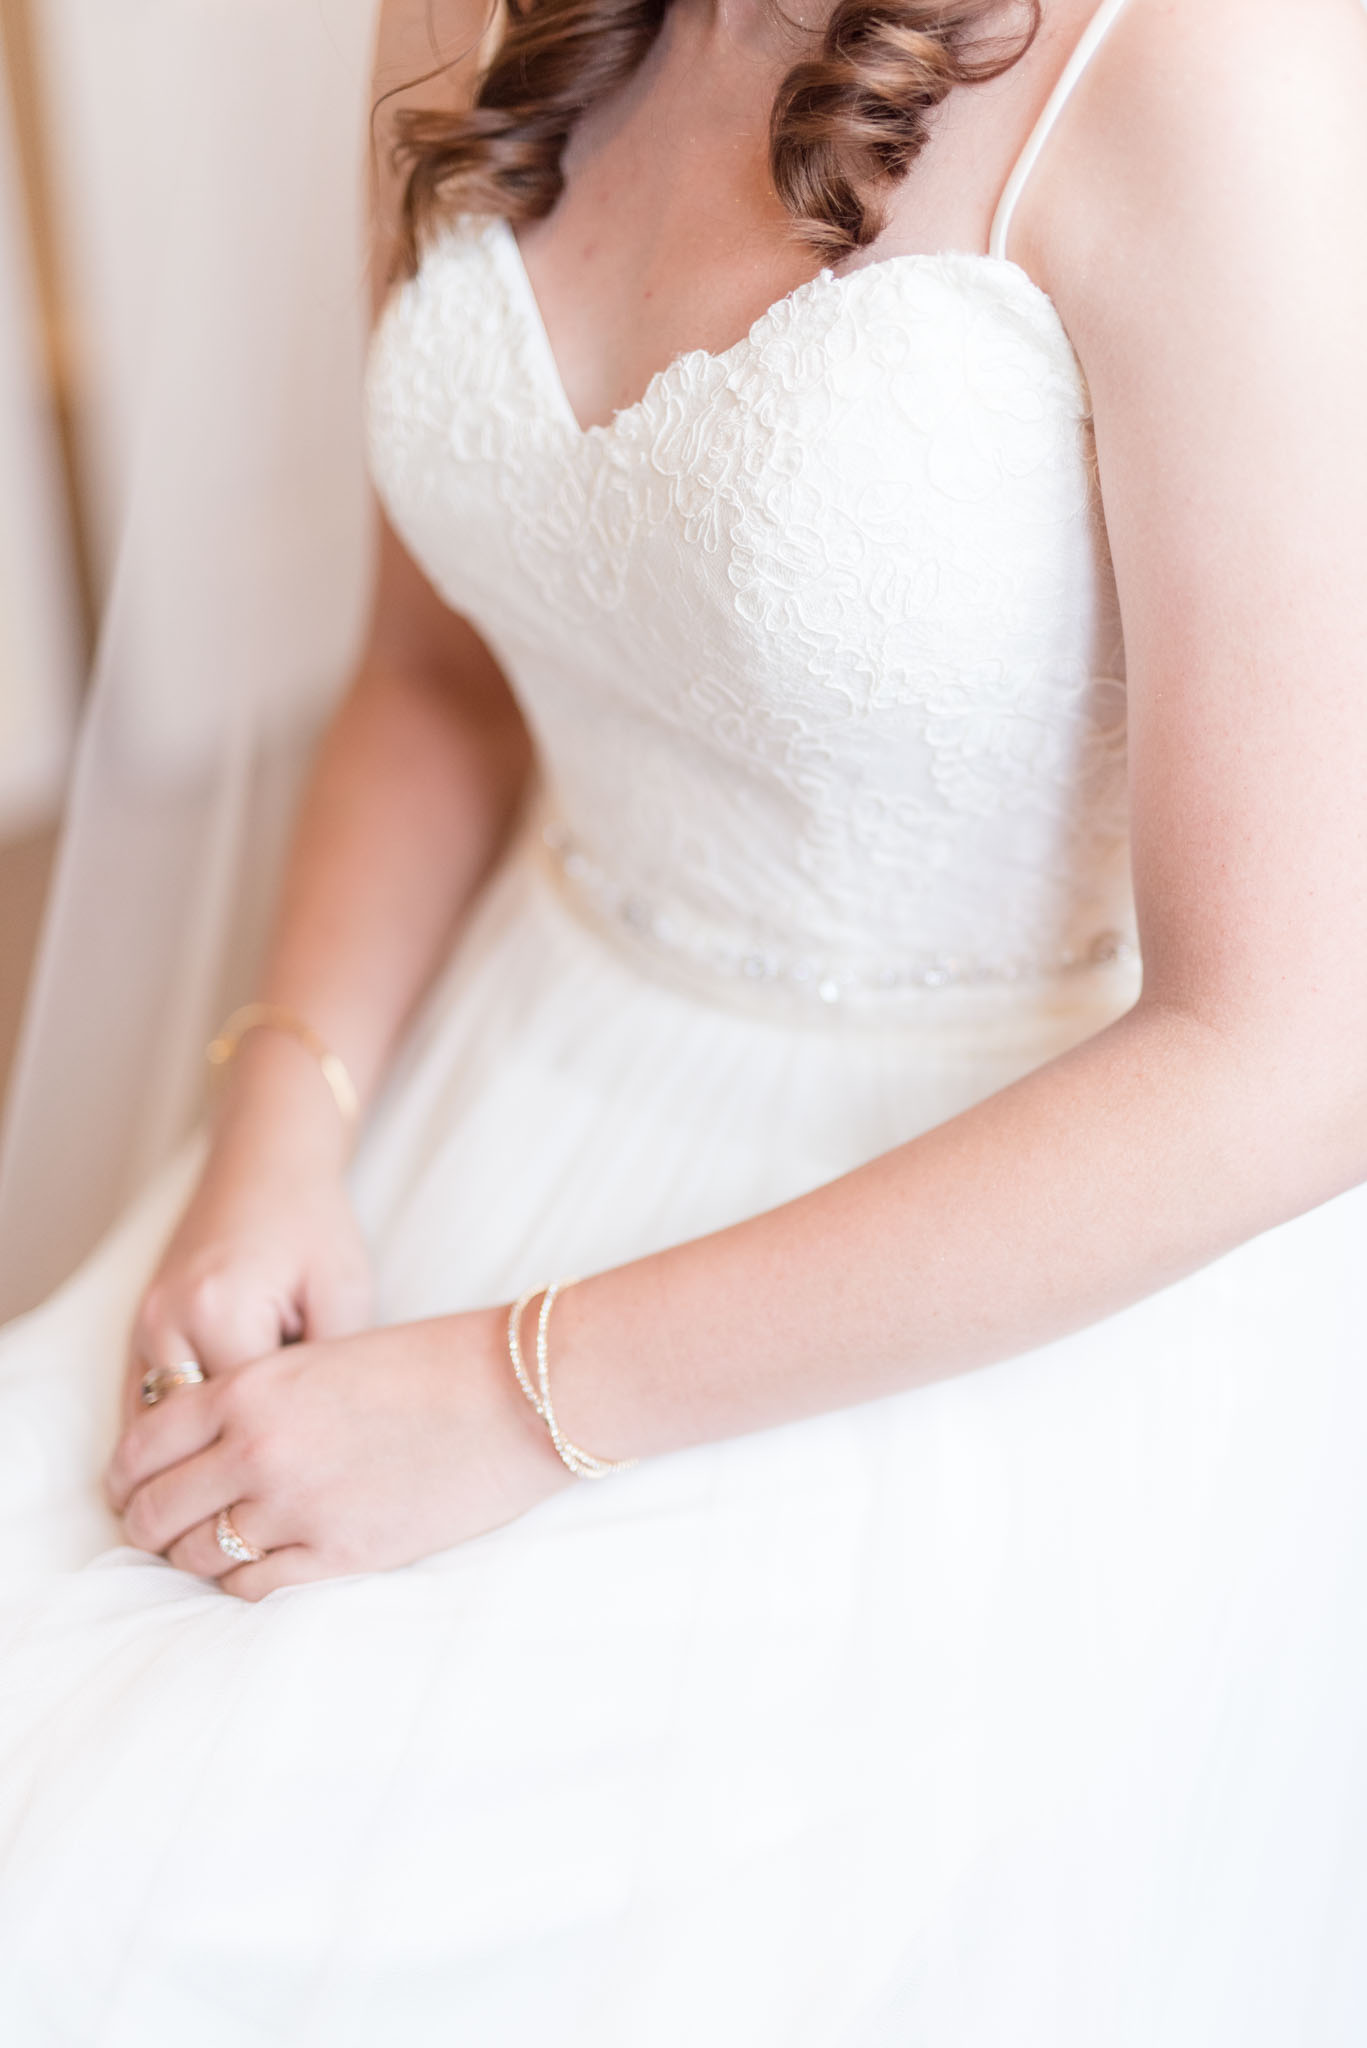 Bride's wedding dress and jewelry